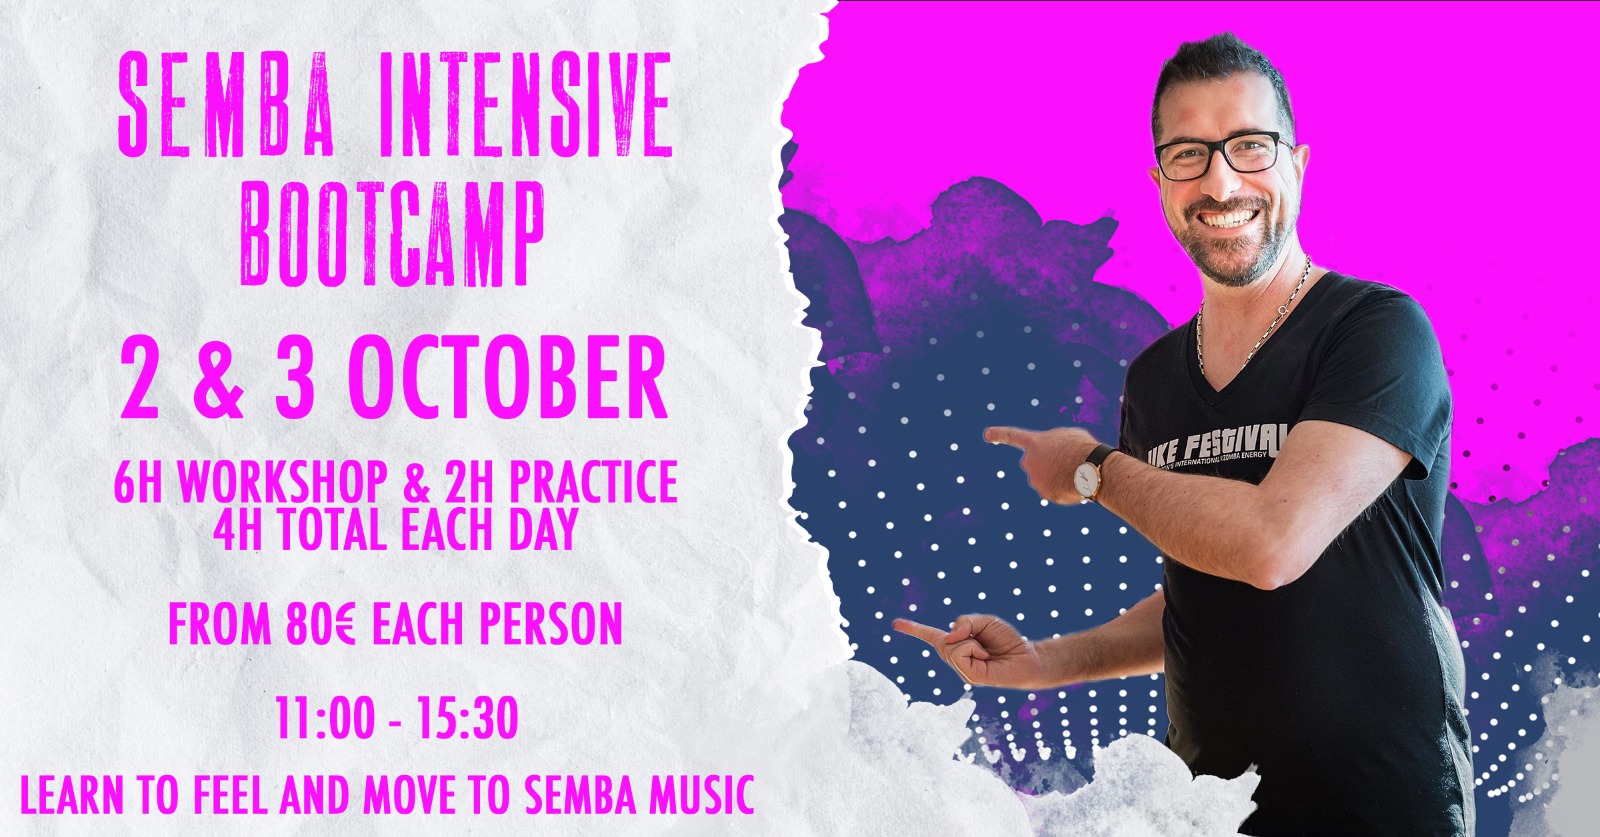 Semba Weekend Bootcamp - 2/3 Oct 2021